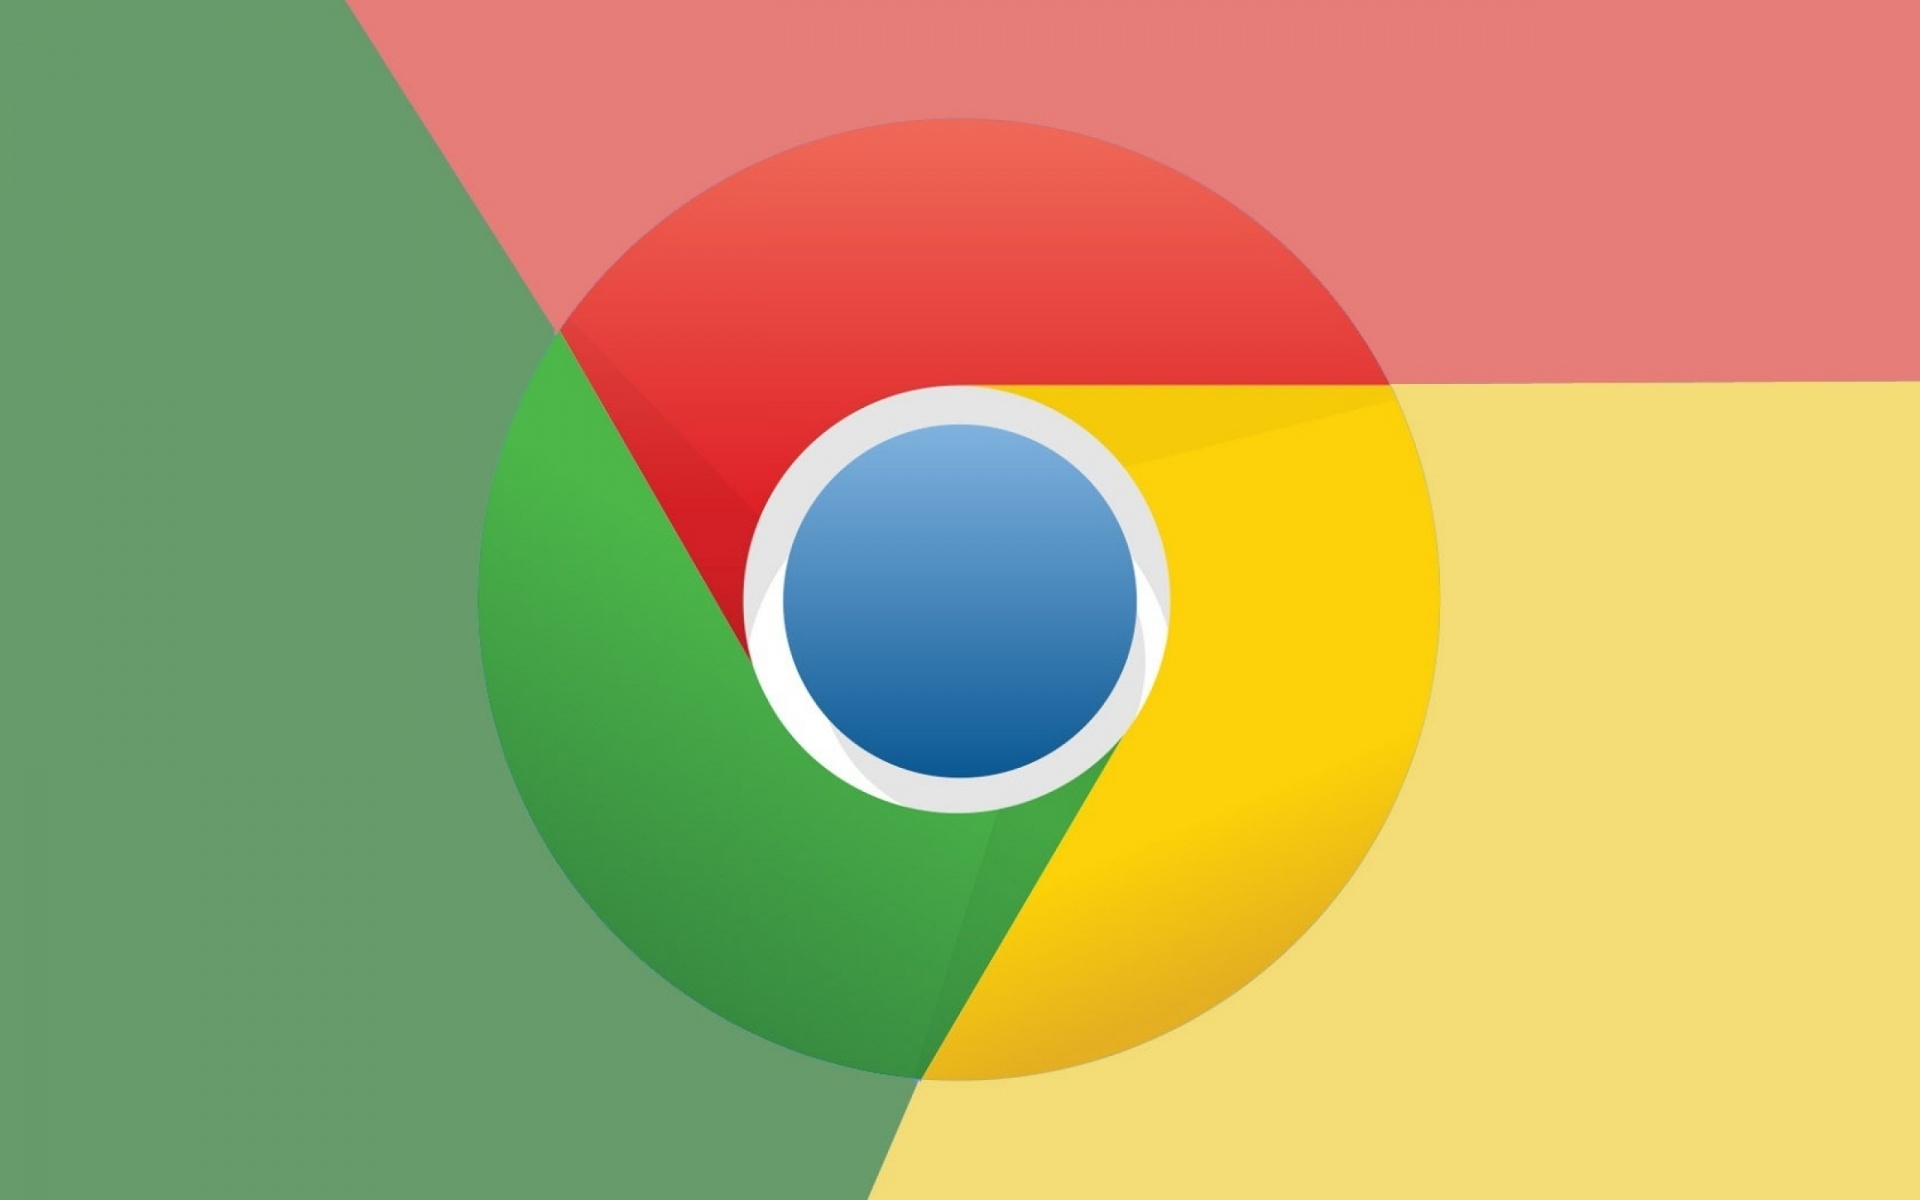 google chrome download for windows 10 64 bit offline installer